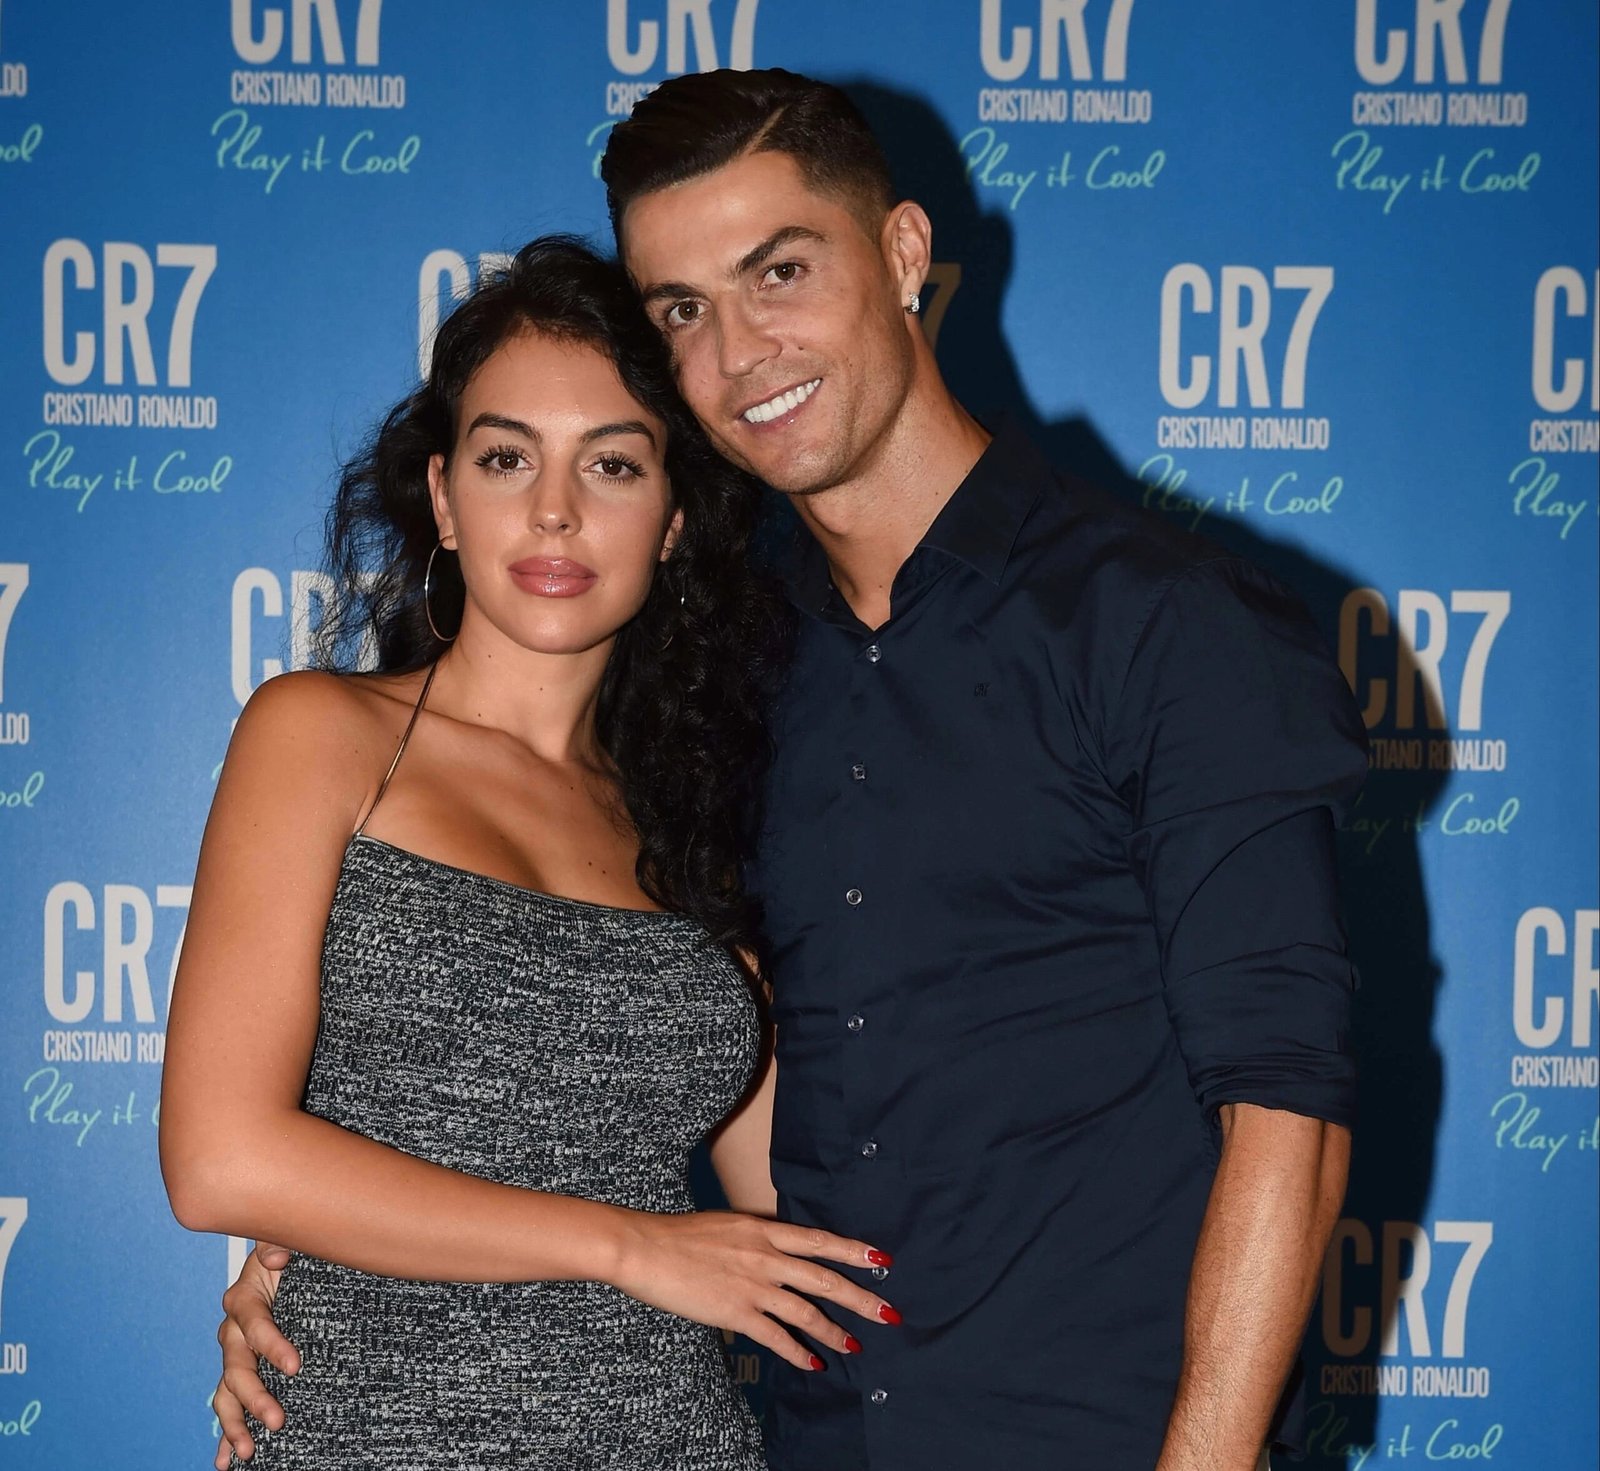 Cristiano Ronaldo celebrated his 37th birthday - See what Georgina gave him